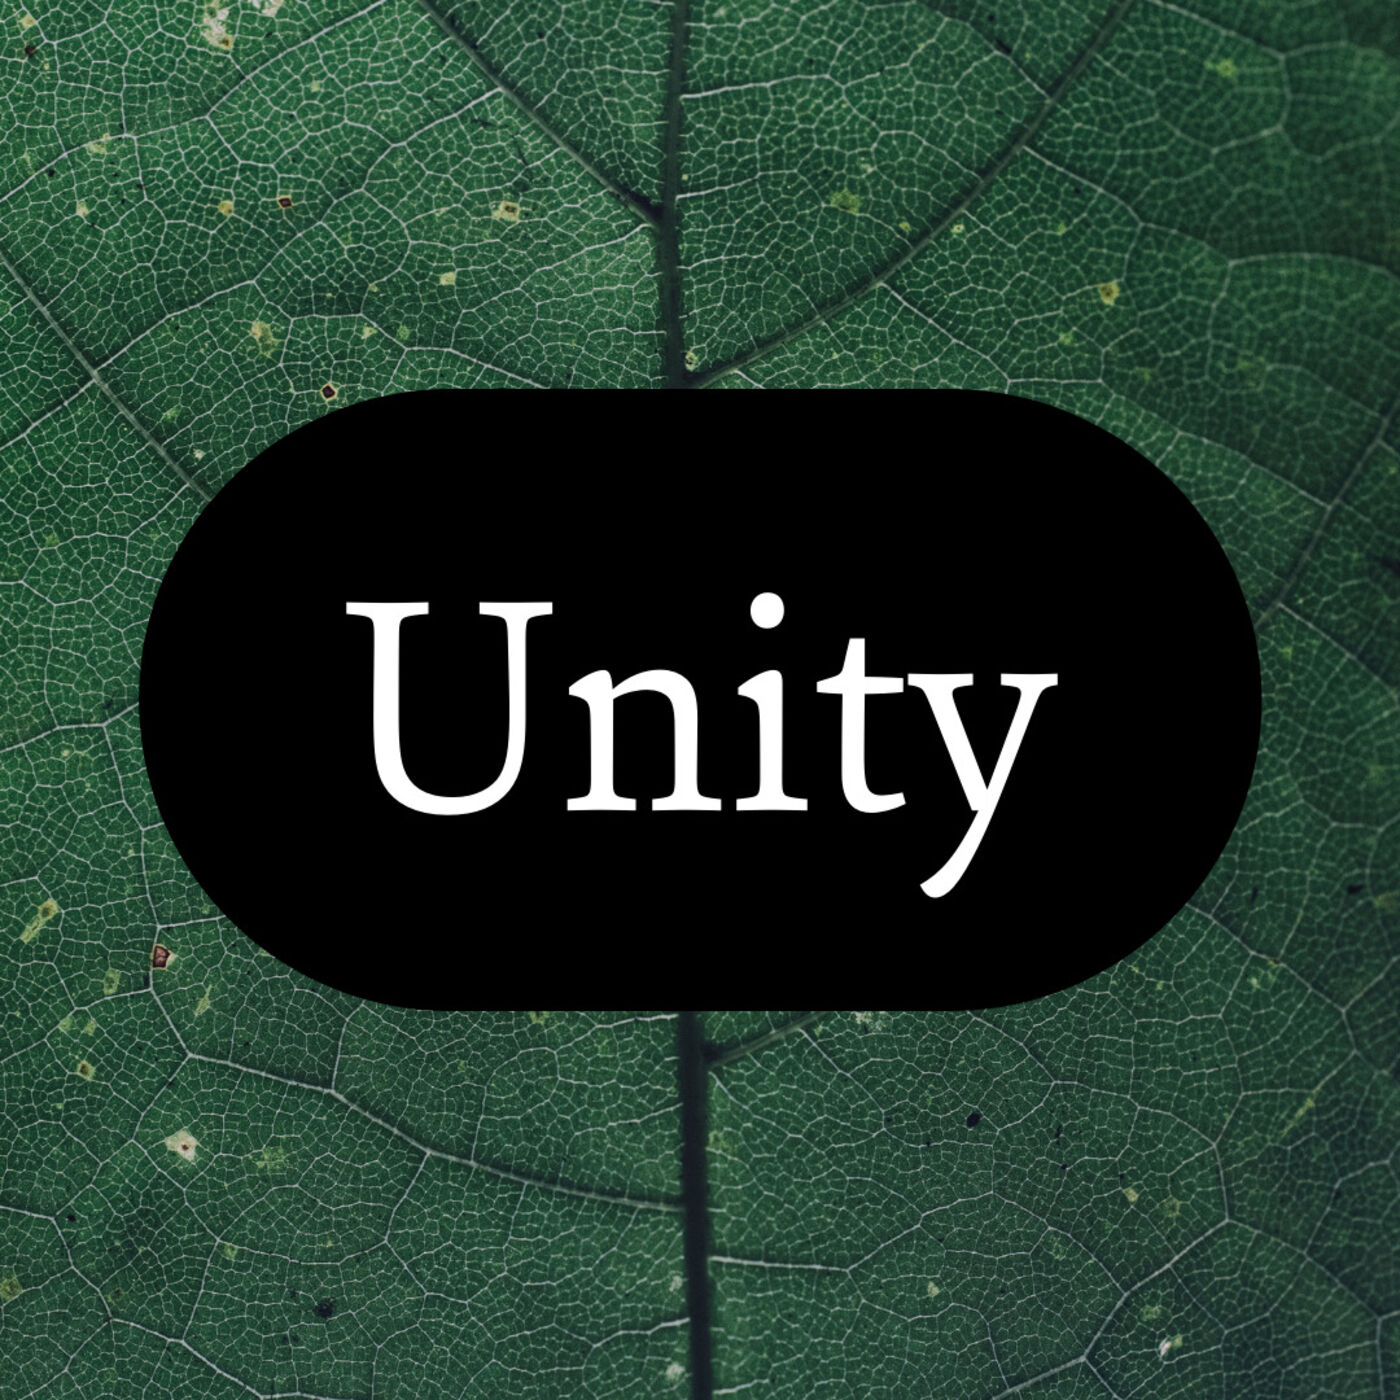 NEW BOOK: Unity